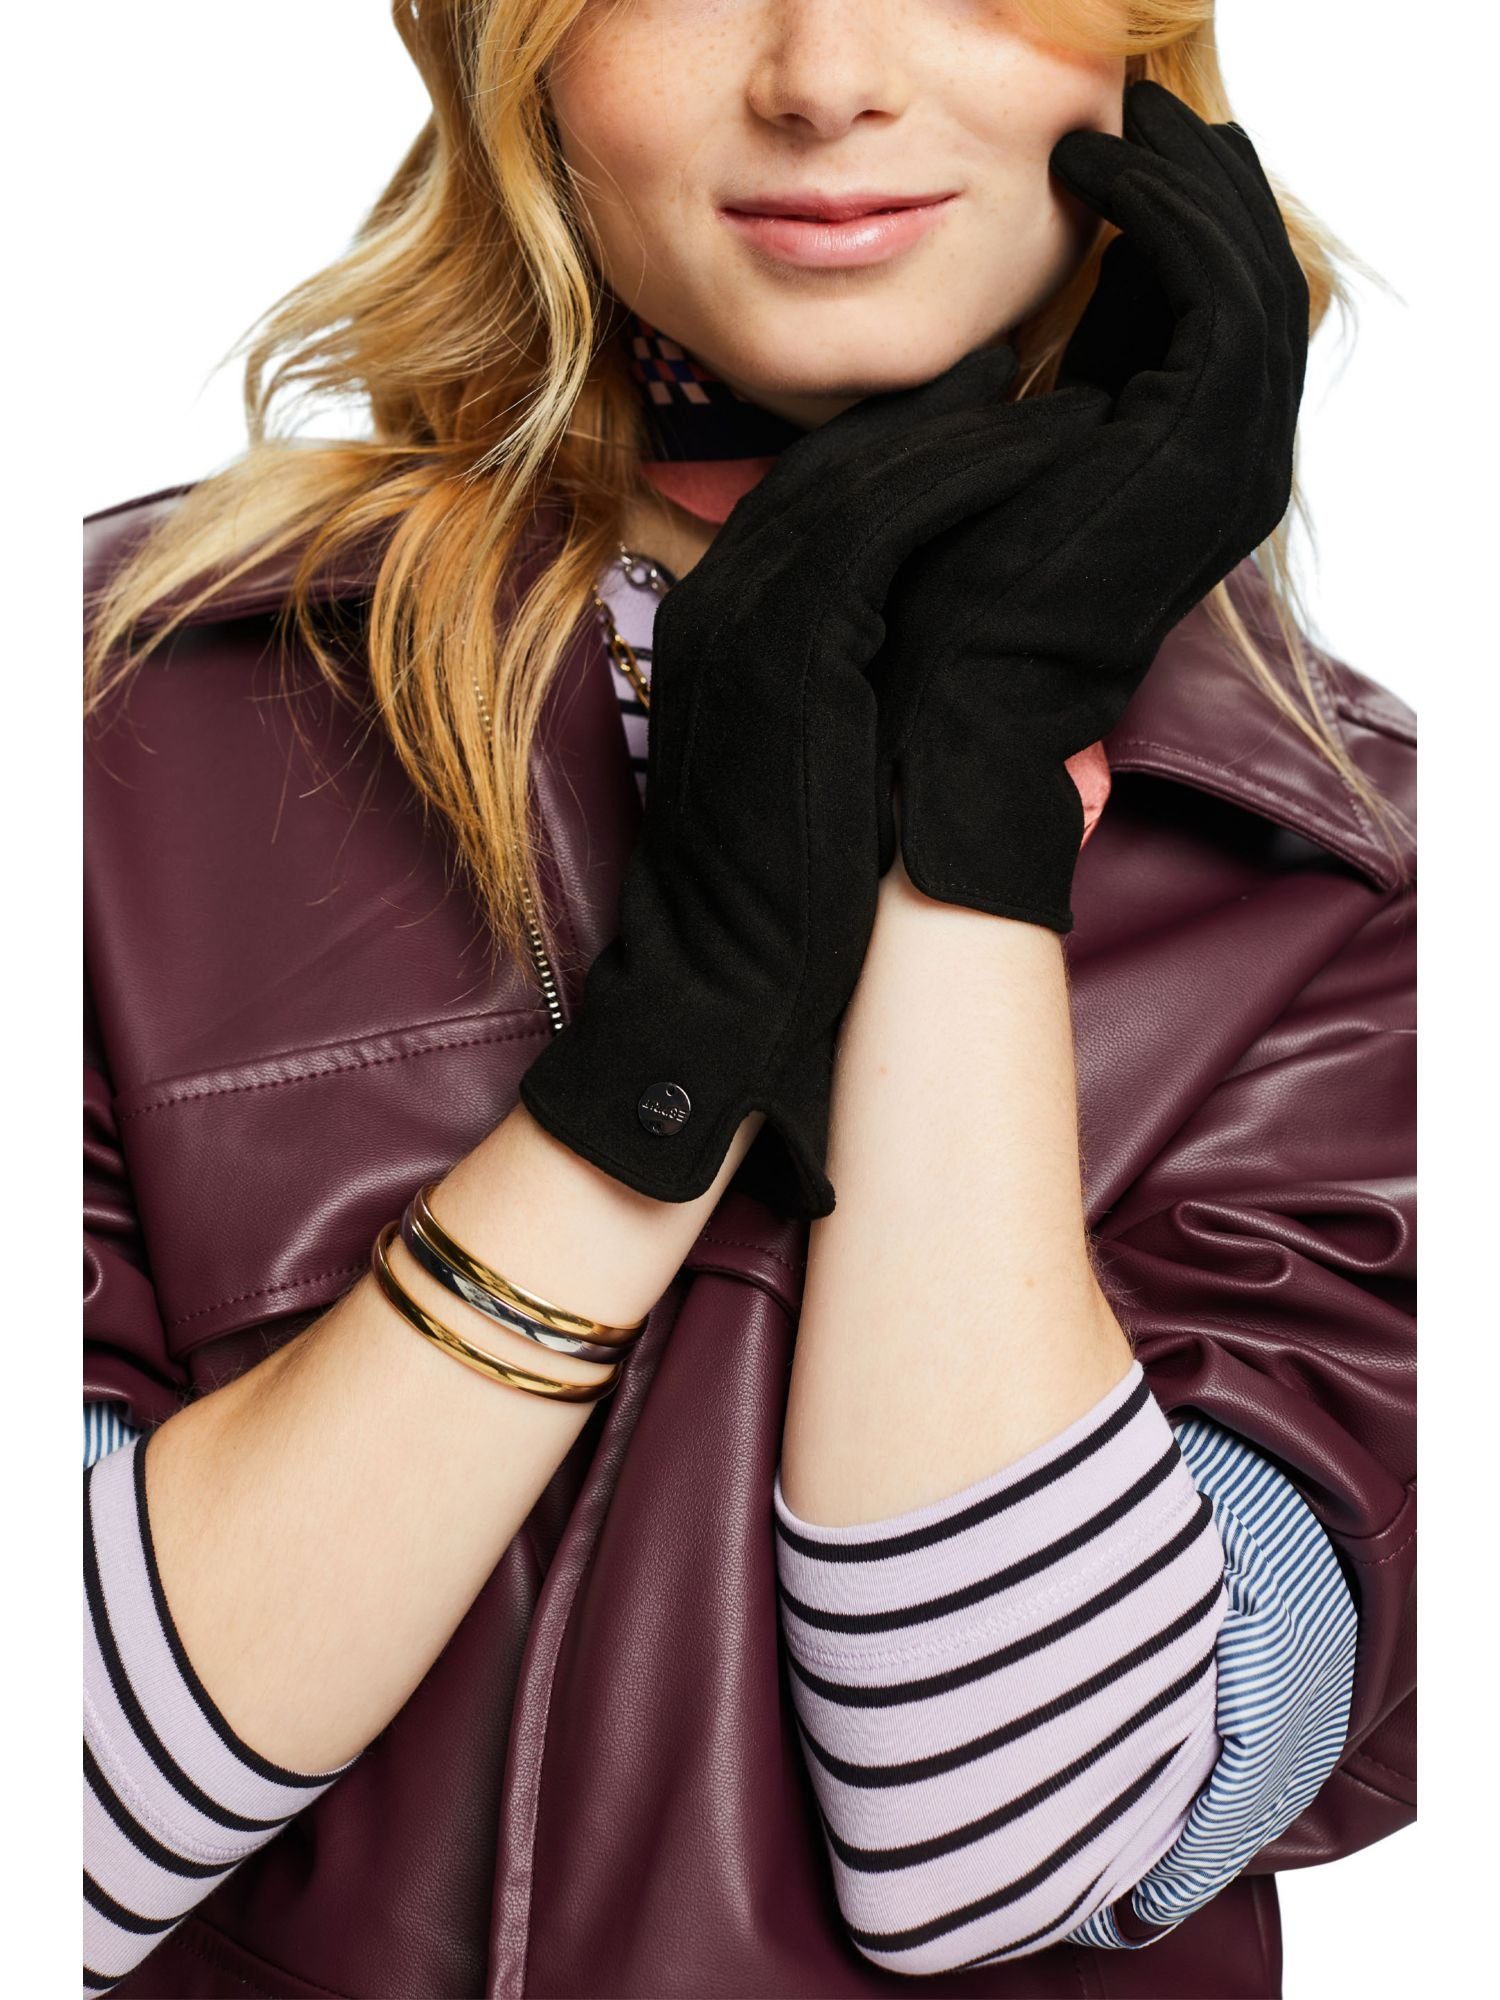 BLACK Strickhandschuhe Touchscreen-Funktion Rauleder-Handschuhe mit Esprit